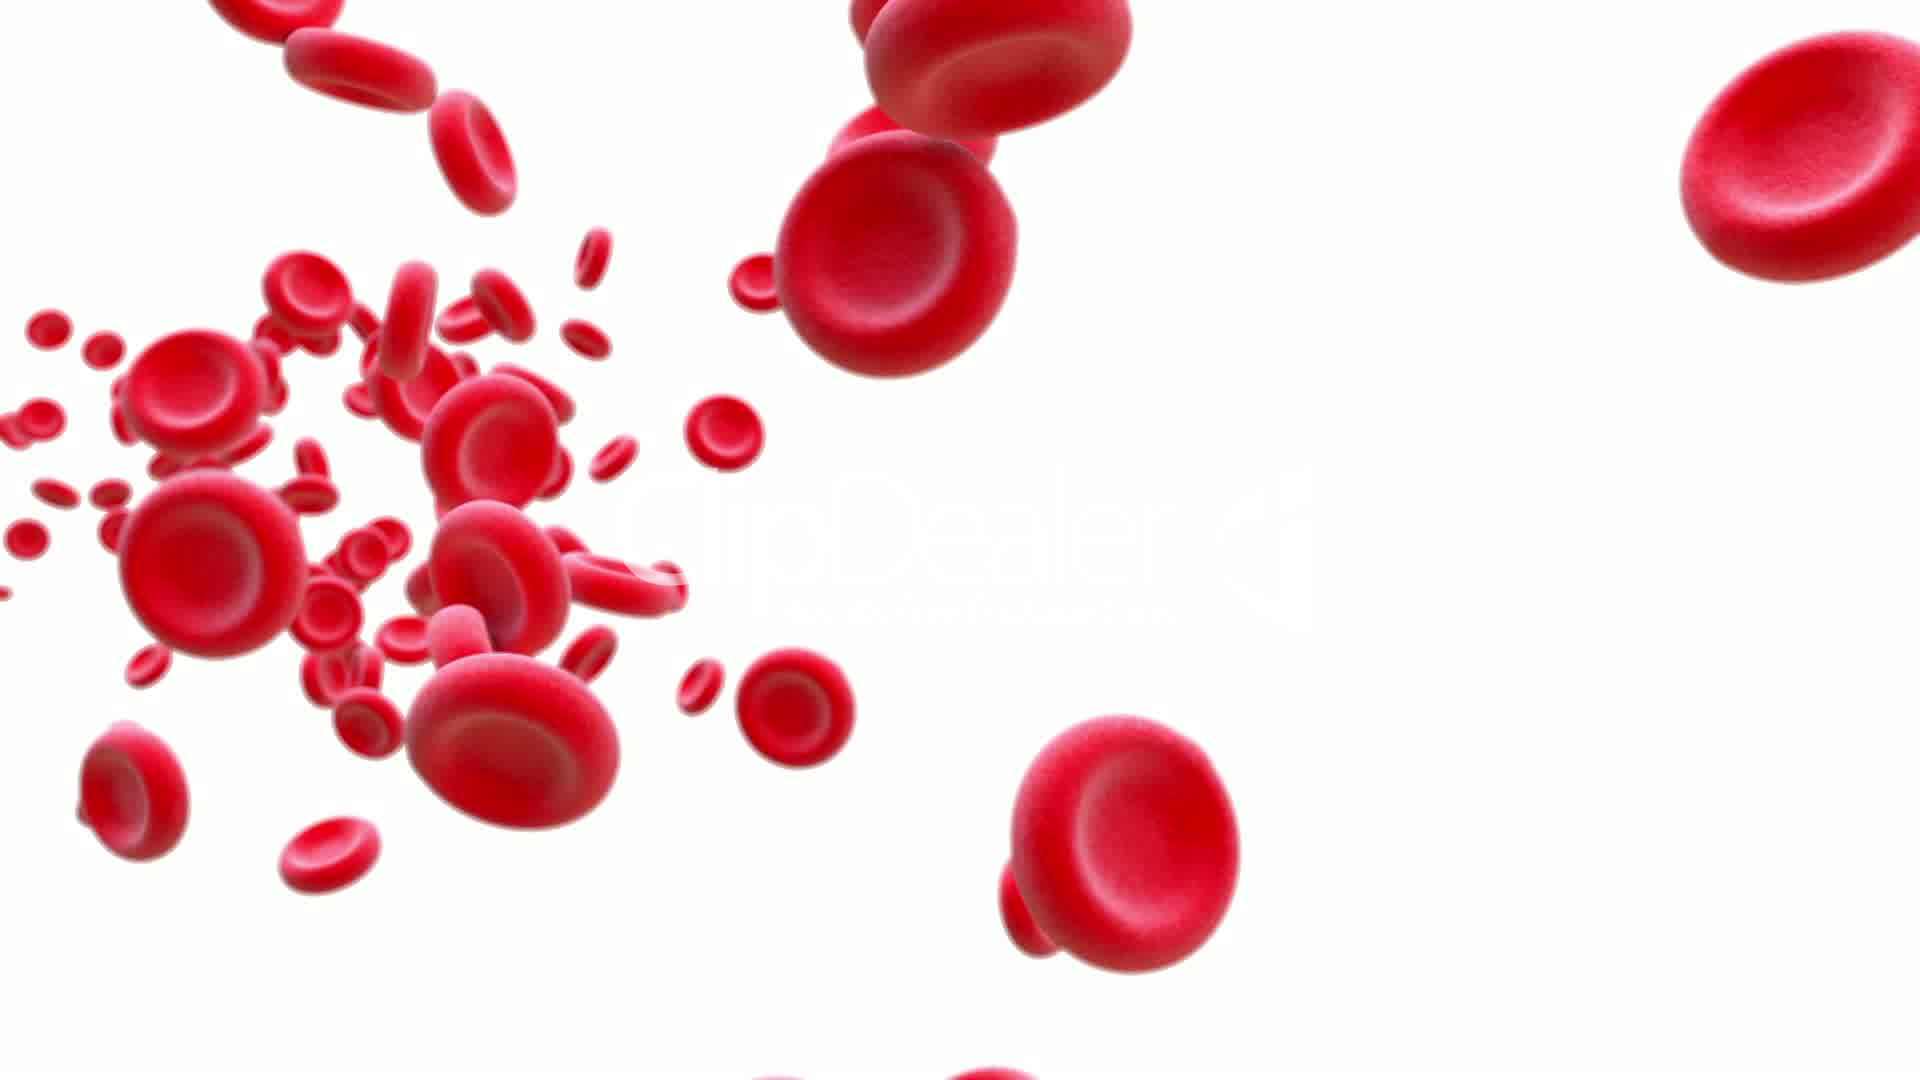 Red Blood Cells Blood Wallpaper 4kwalpaperlist.com